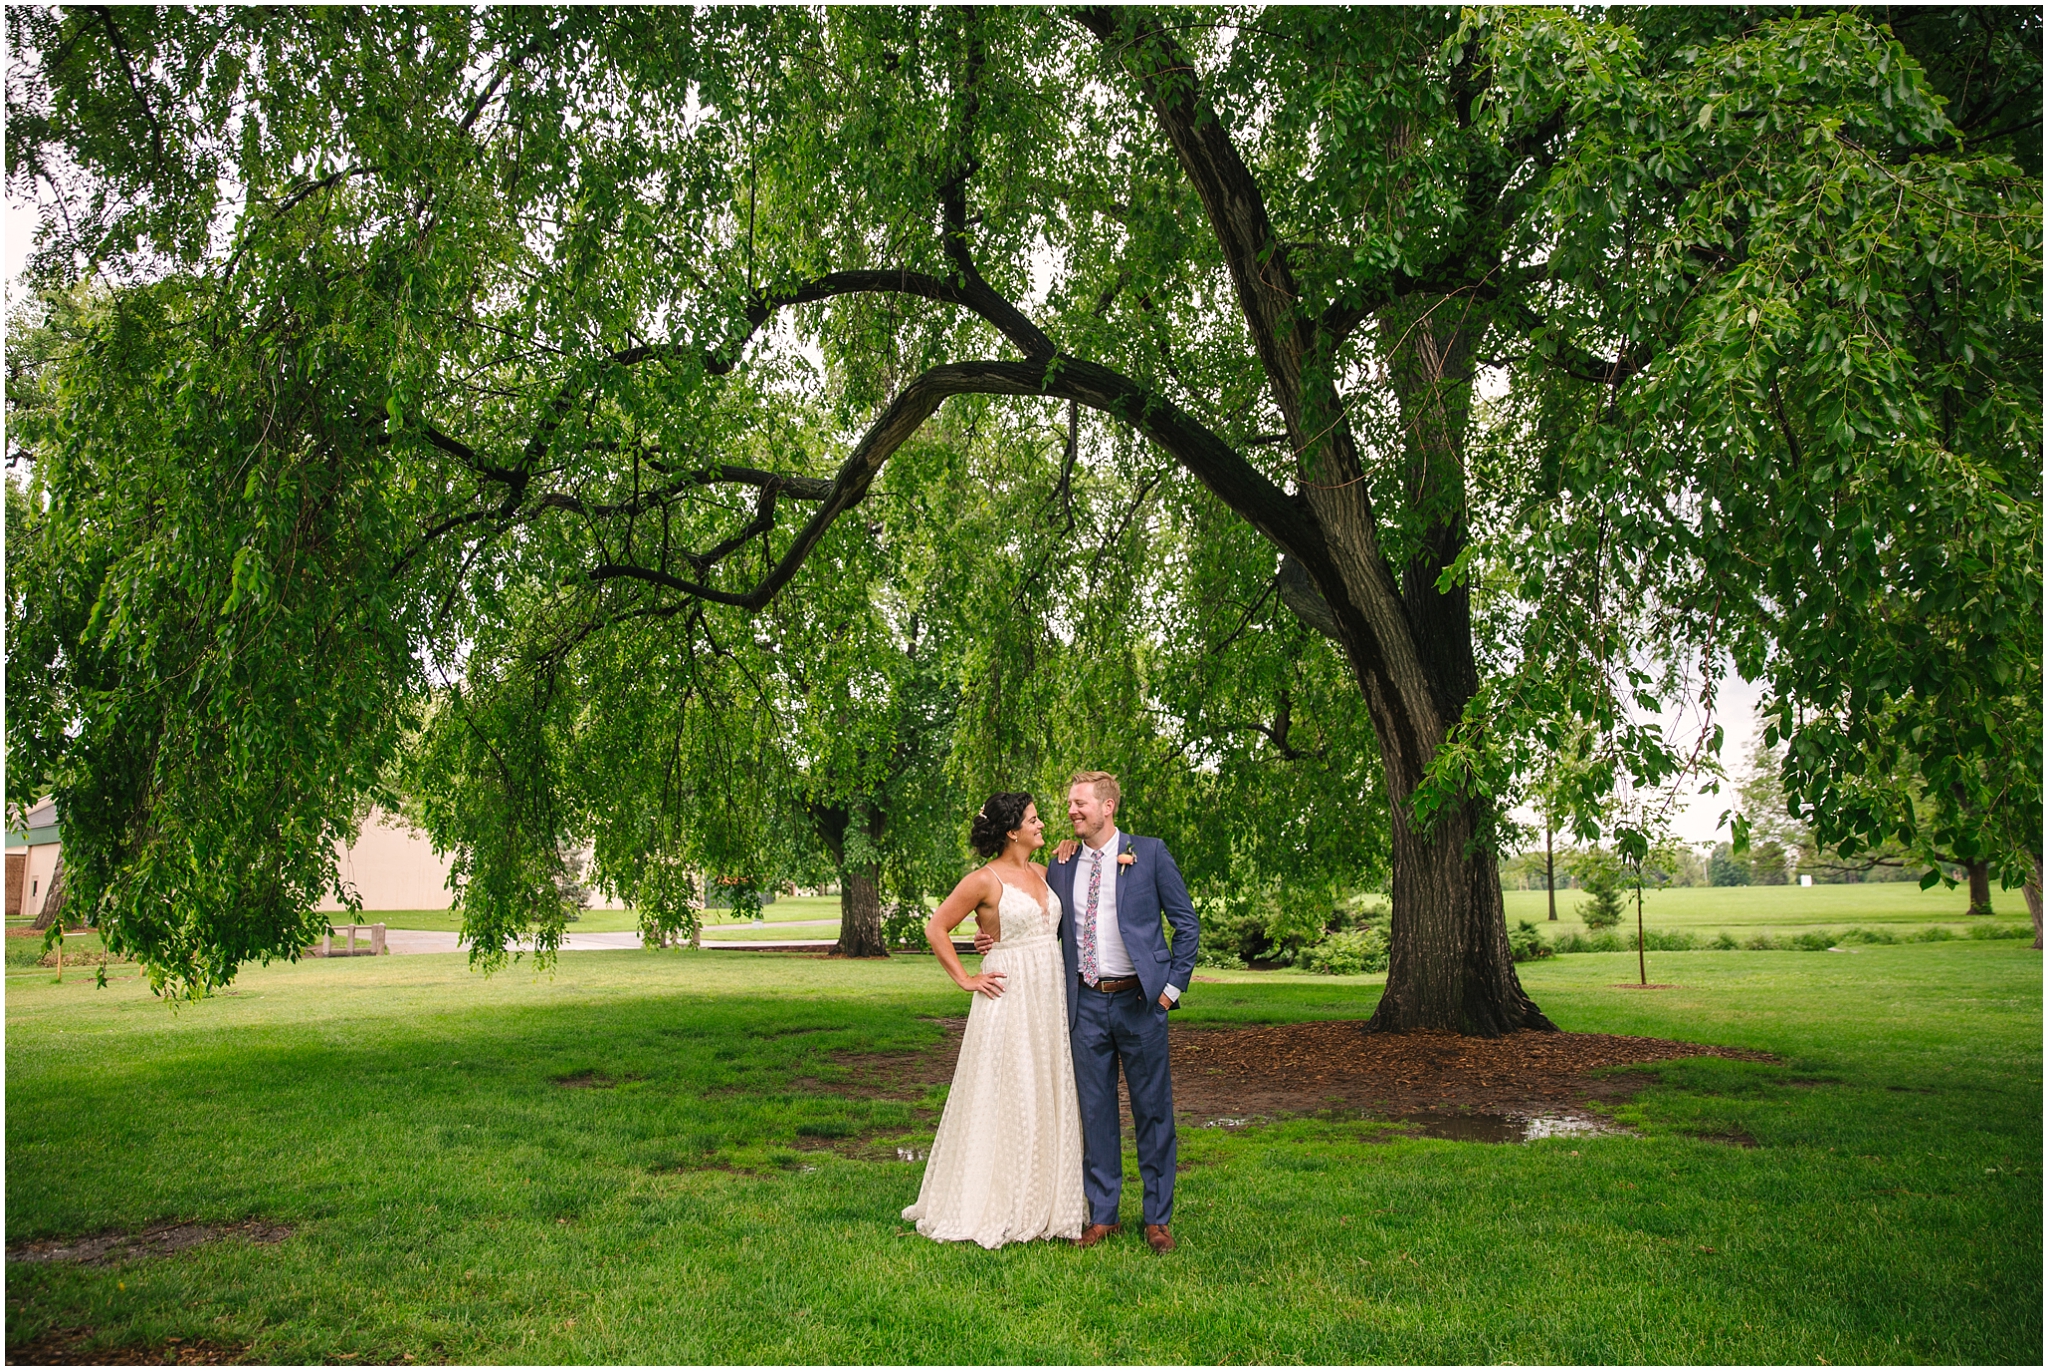 Bride and groom under a willow tree at Washington Park Boathouse wedding in Denver Colorado